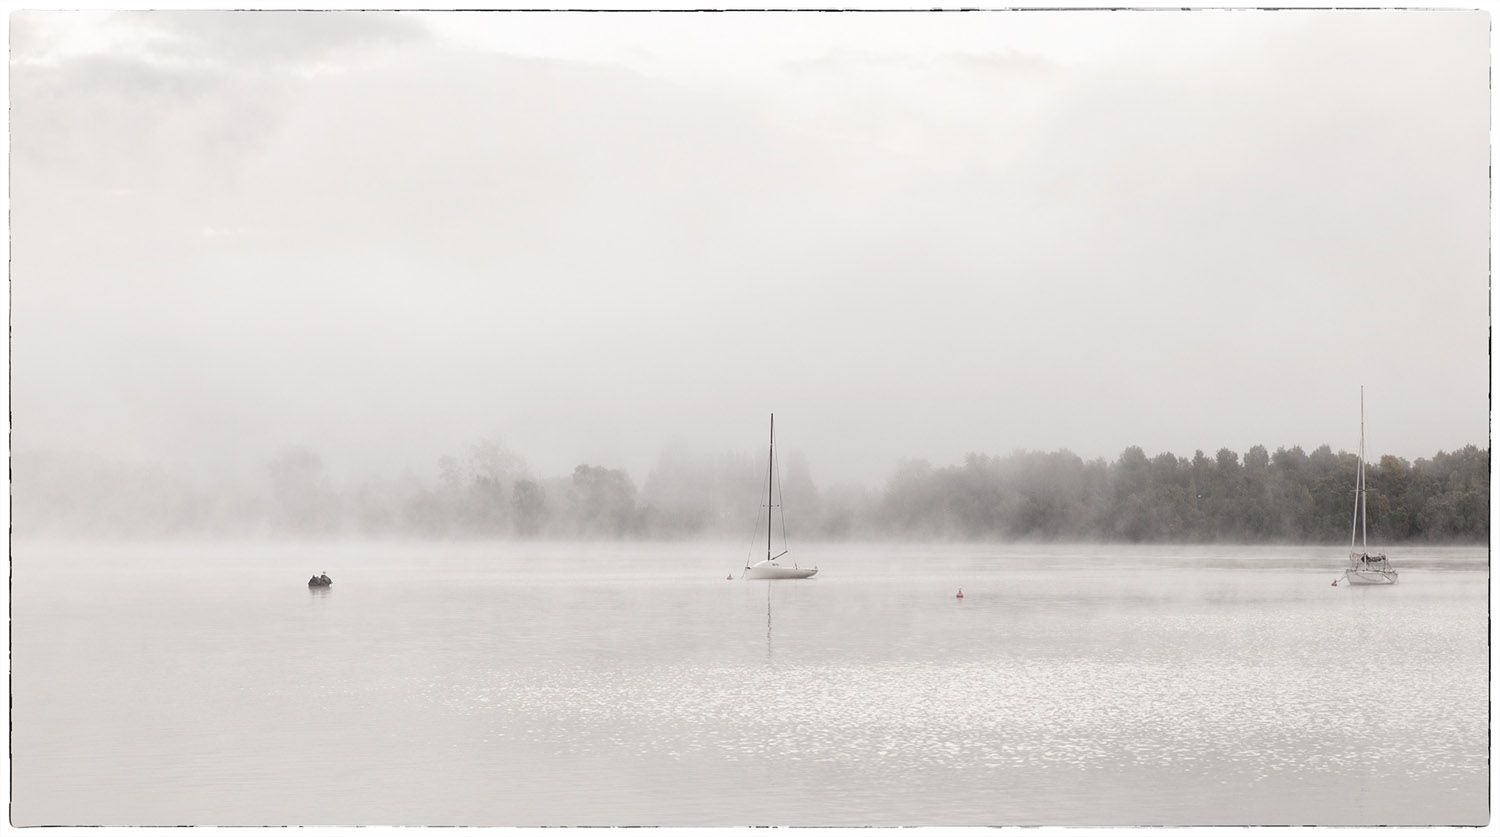 Brouilllard sur le lac - Photo Alain Besnard